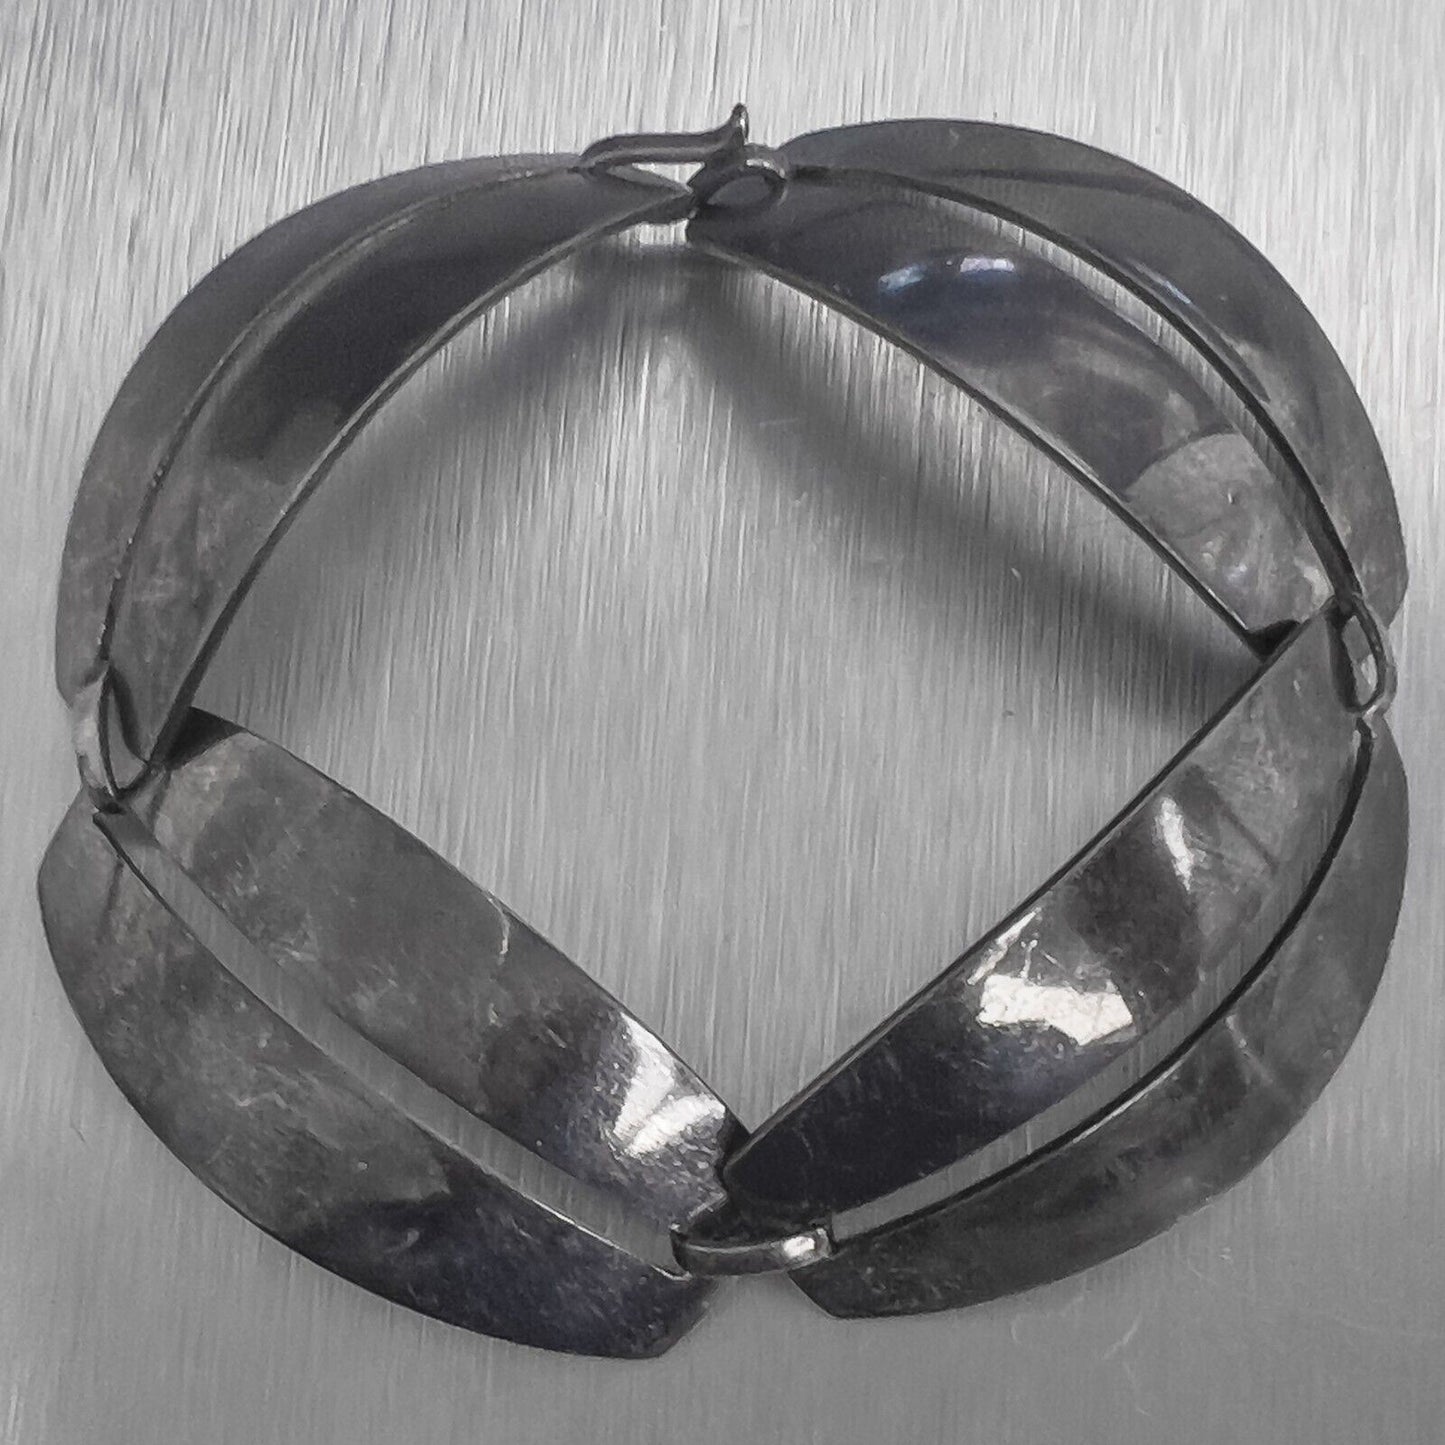 Georg Jensen 170 Sterling Silver Curved Panel Link Bracelet 6.5" by Nanna Ditzel